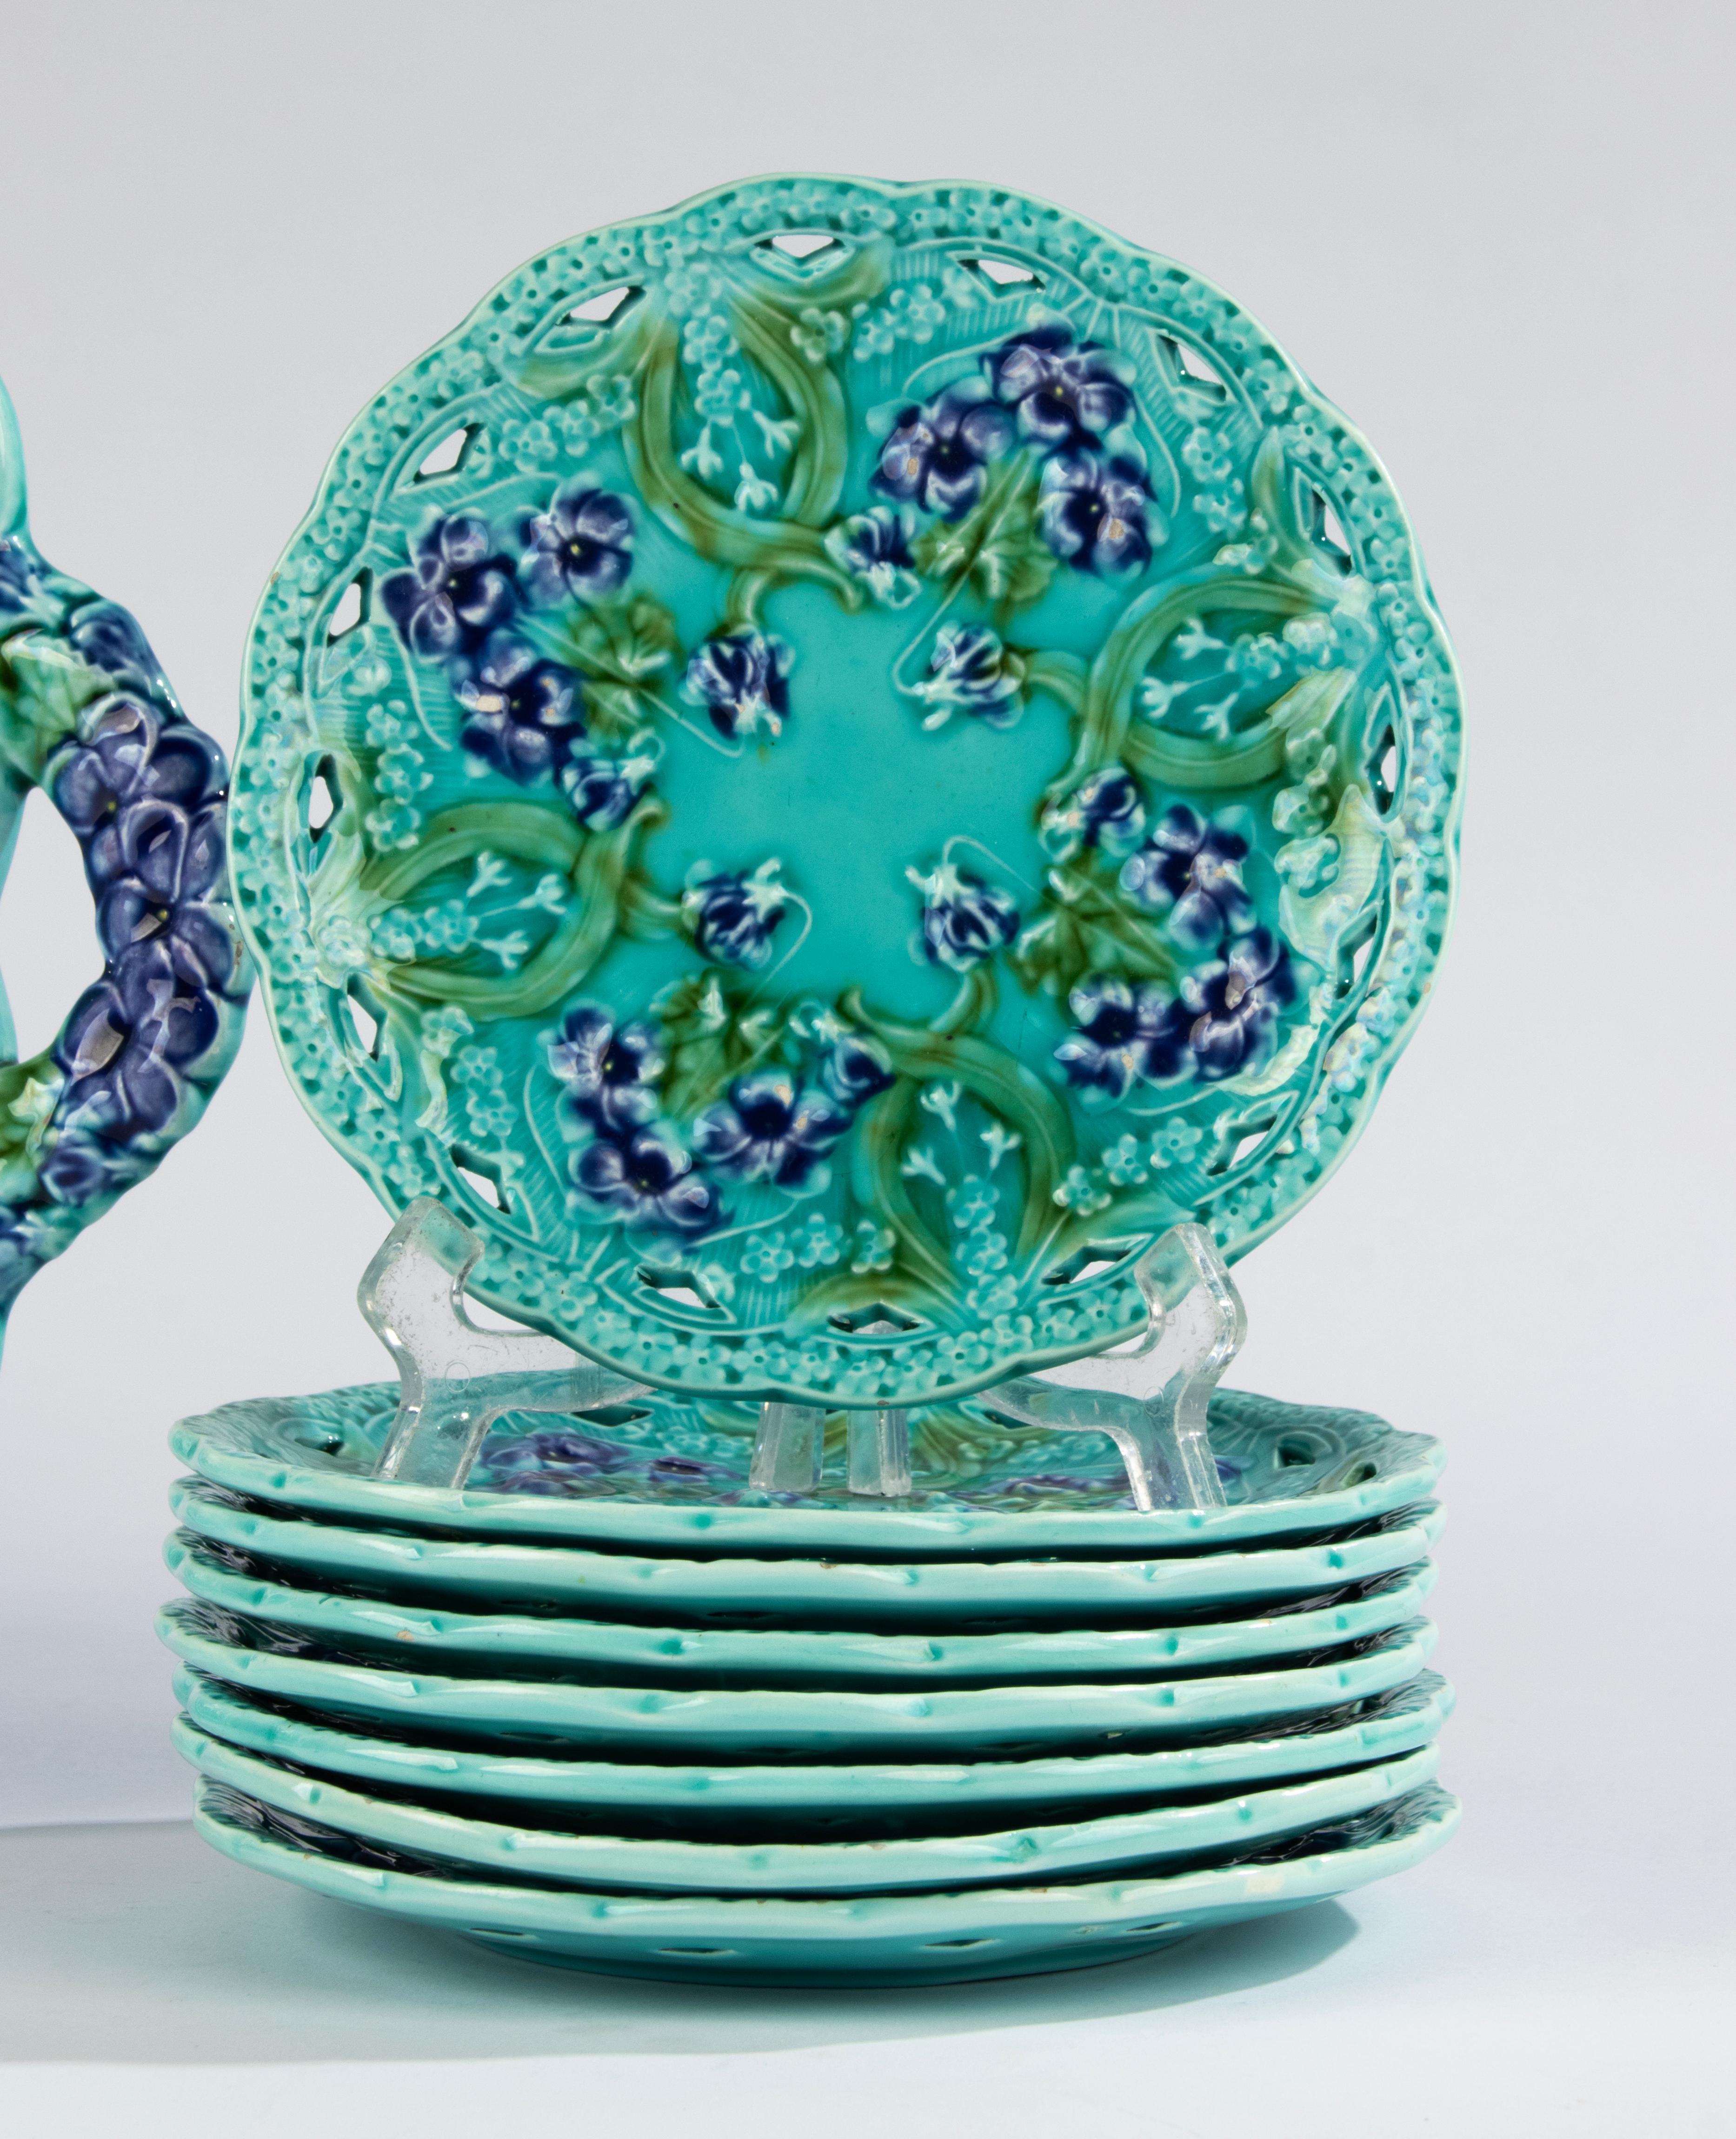 9-Piece Majolica Ceramic Cake Set - Villeroy & Boch - Art Nouveau  For Sale 2